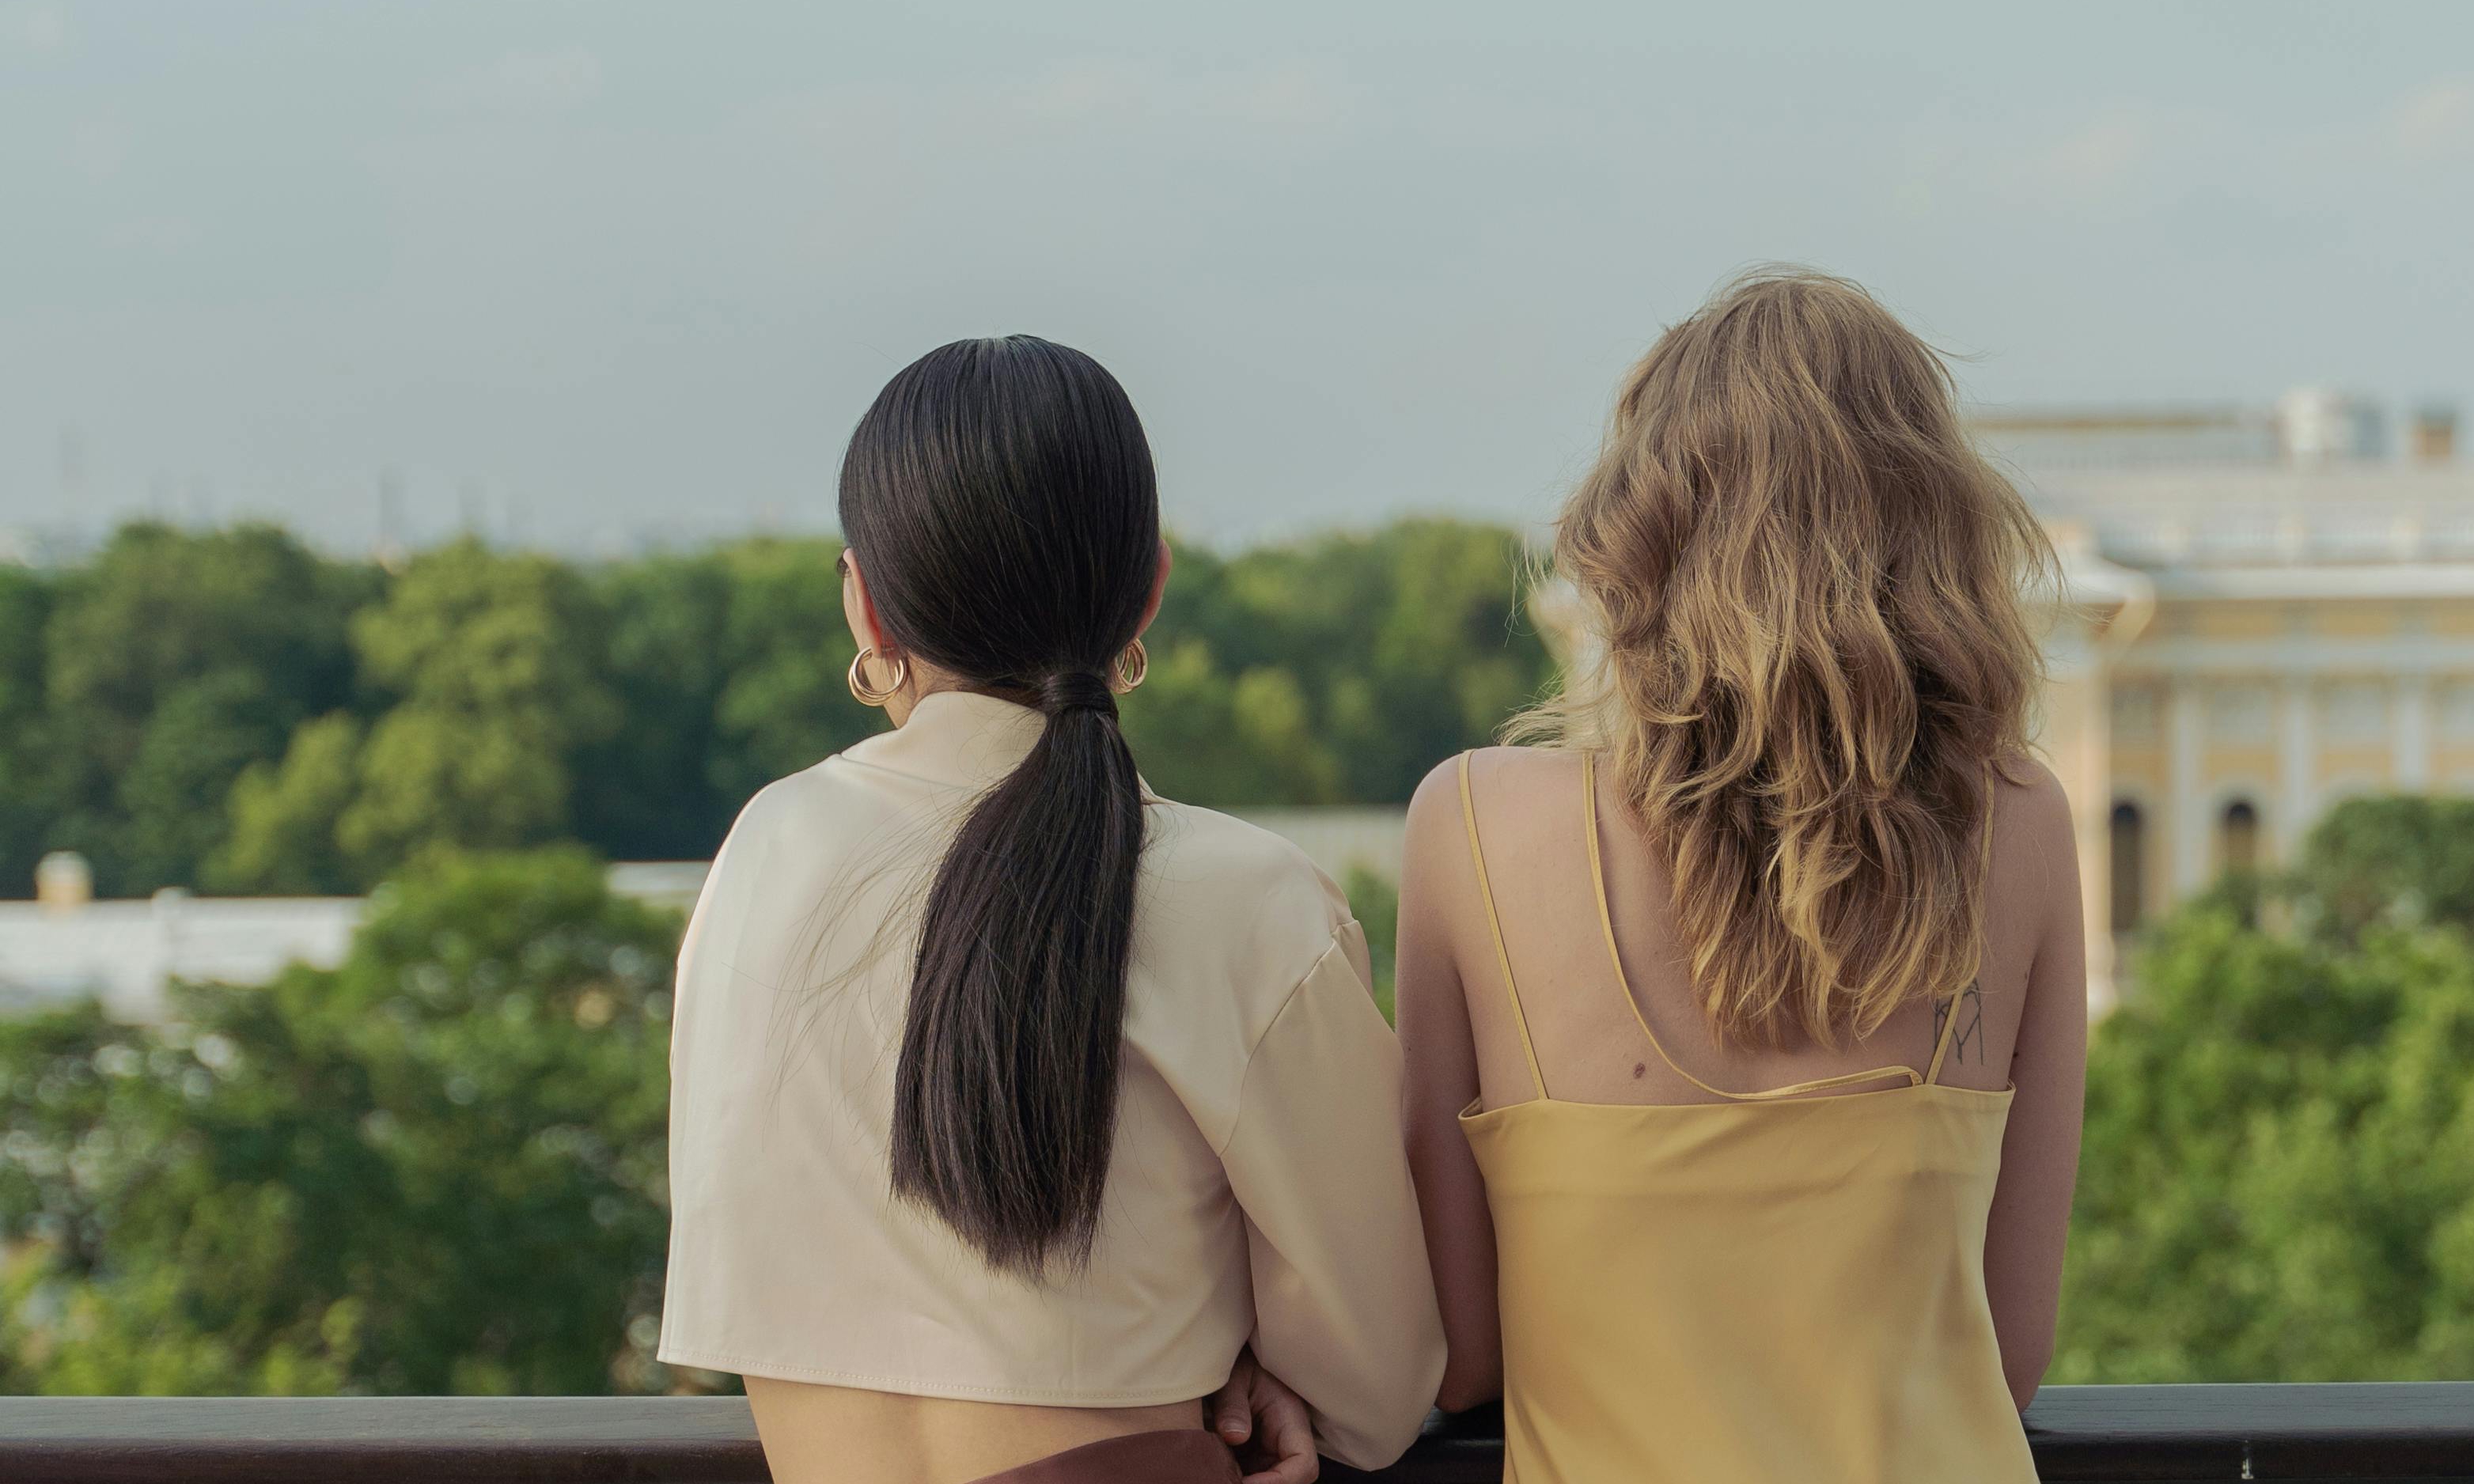 Two women side-by-side on a balcony | Source: Pexels